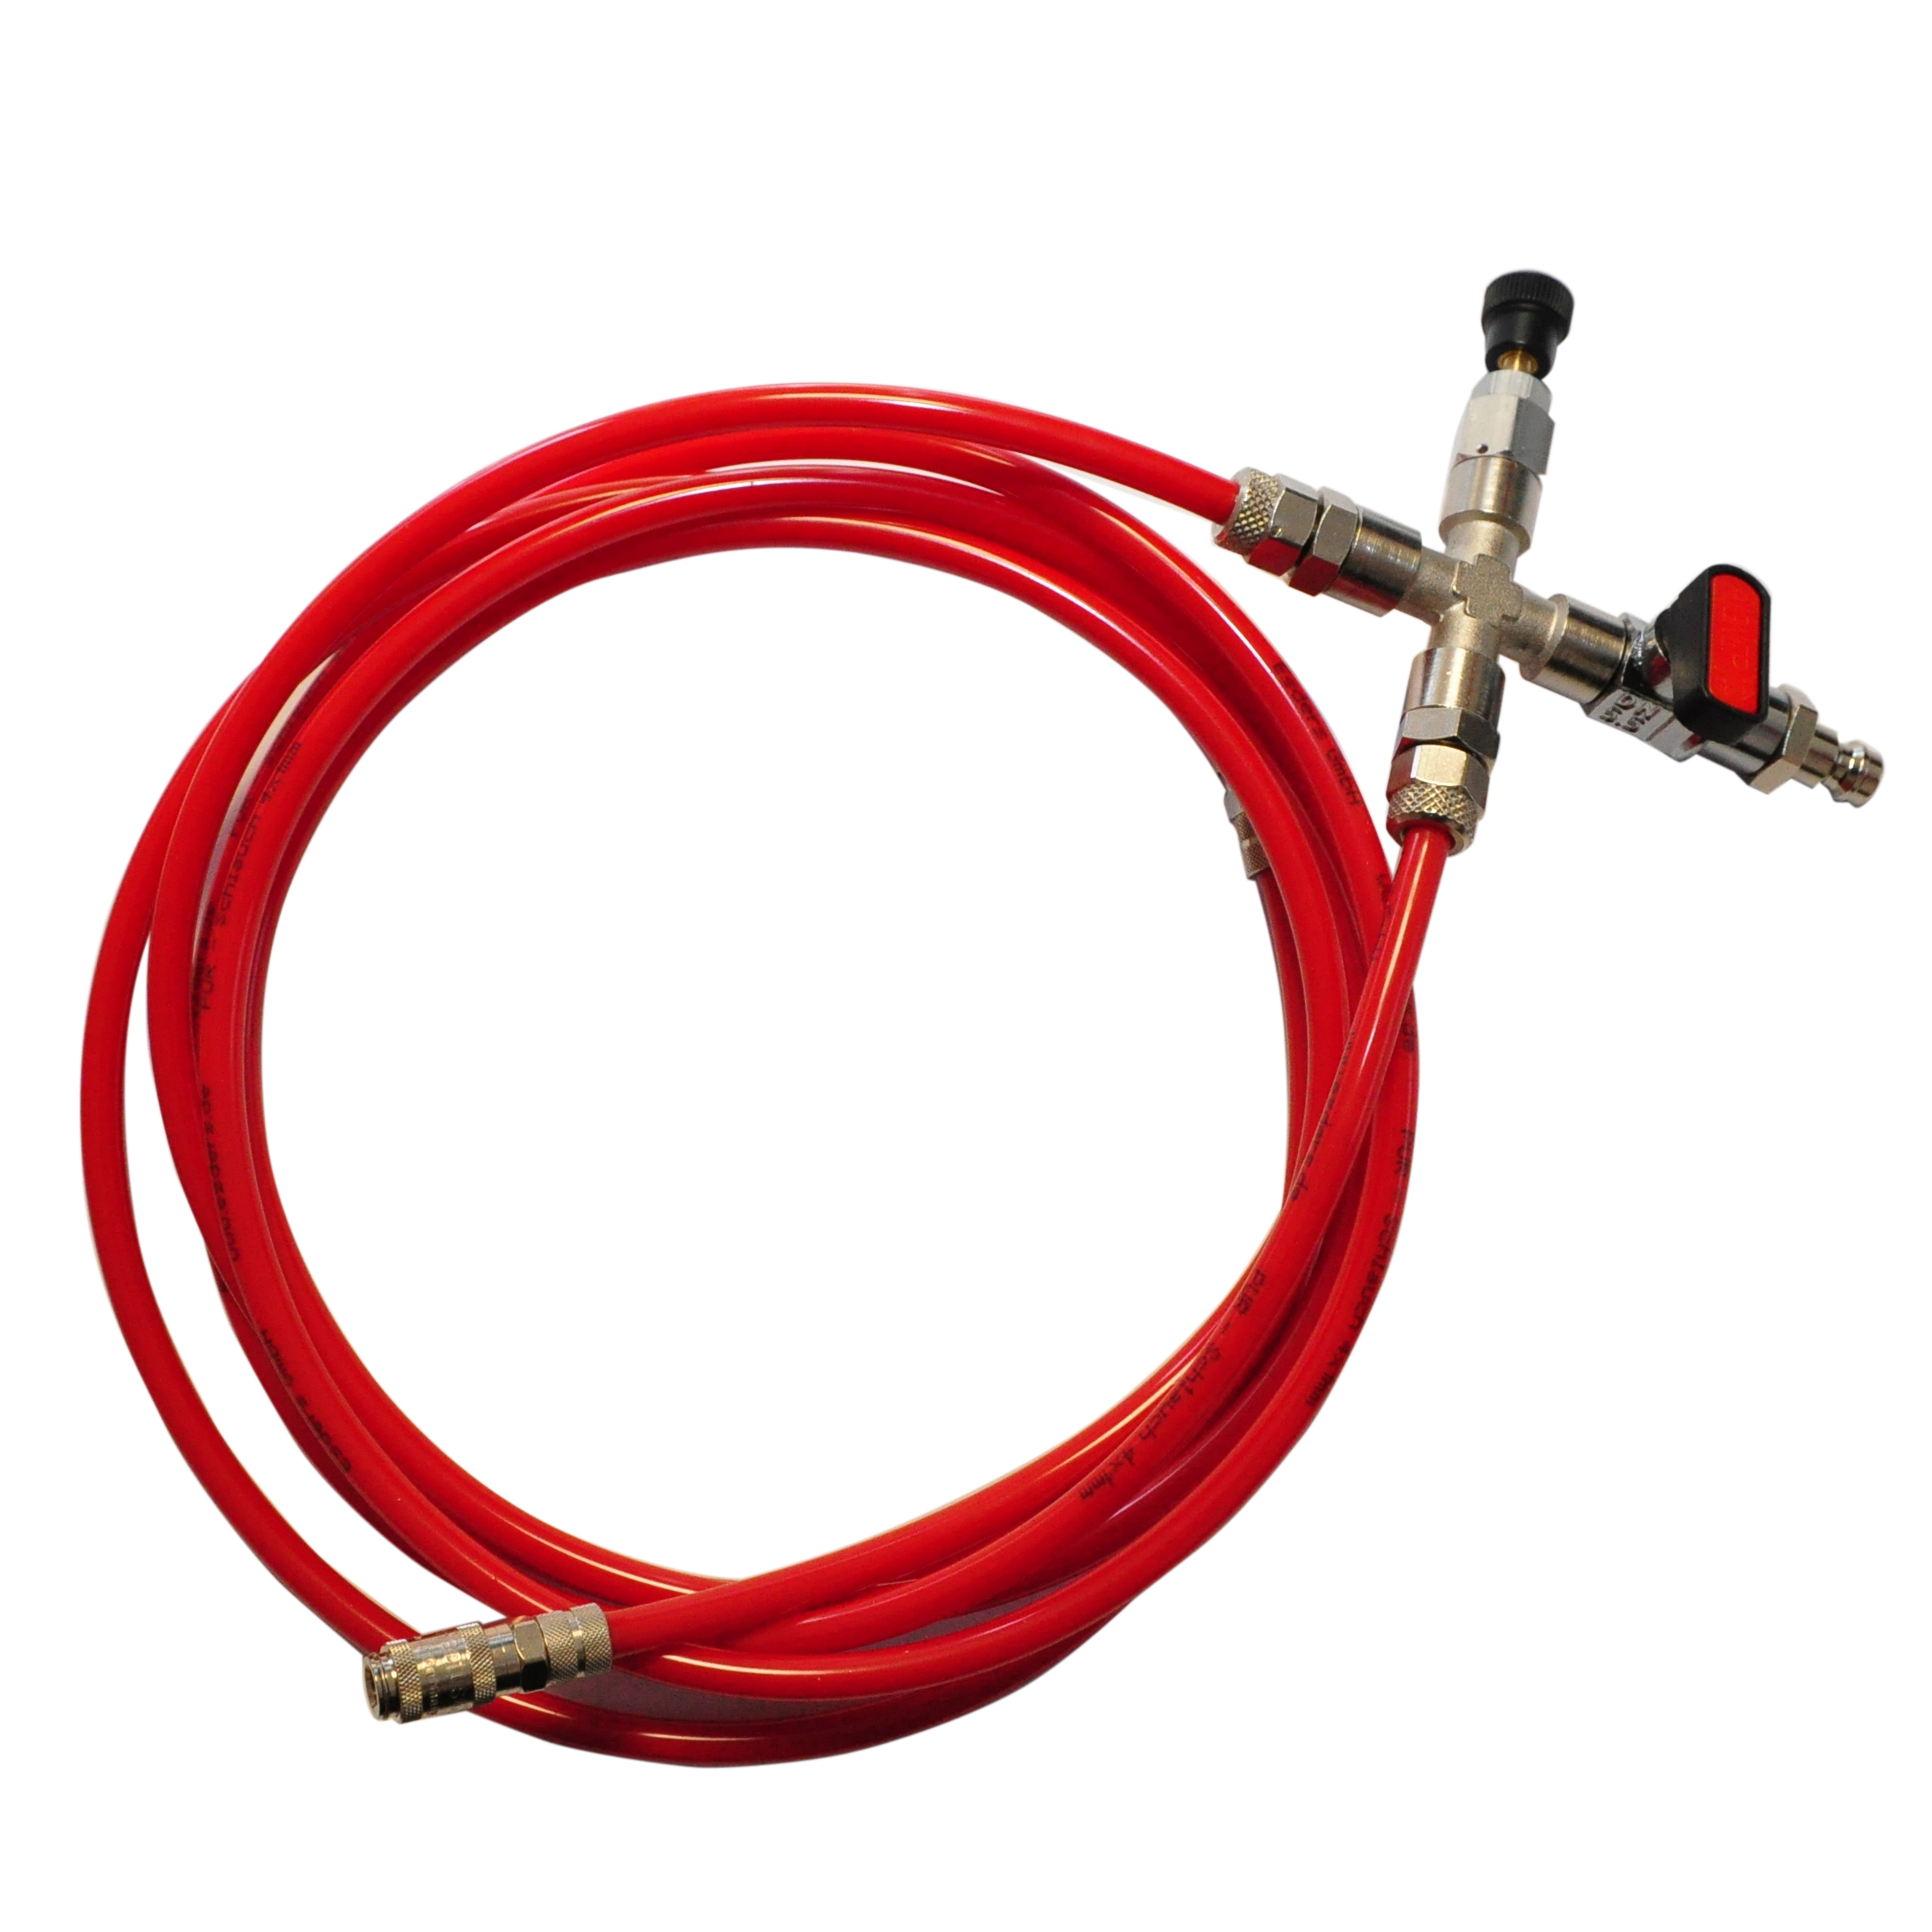 Connecting hose pressure test